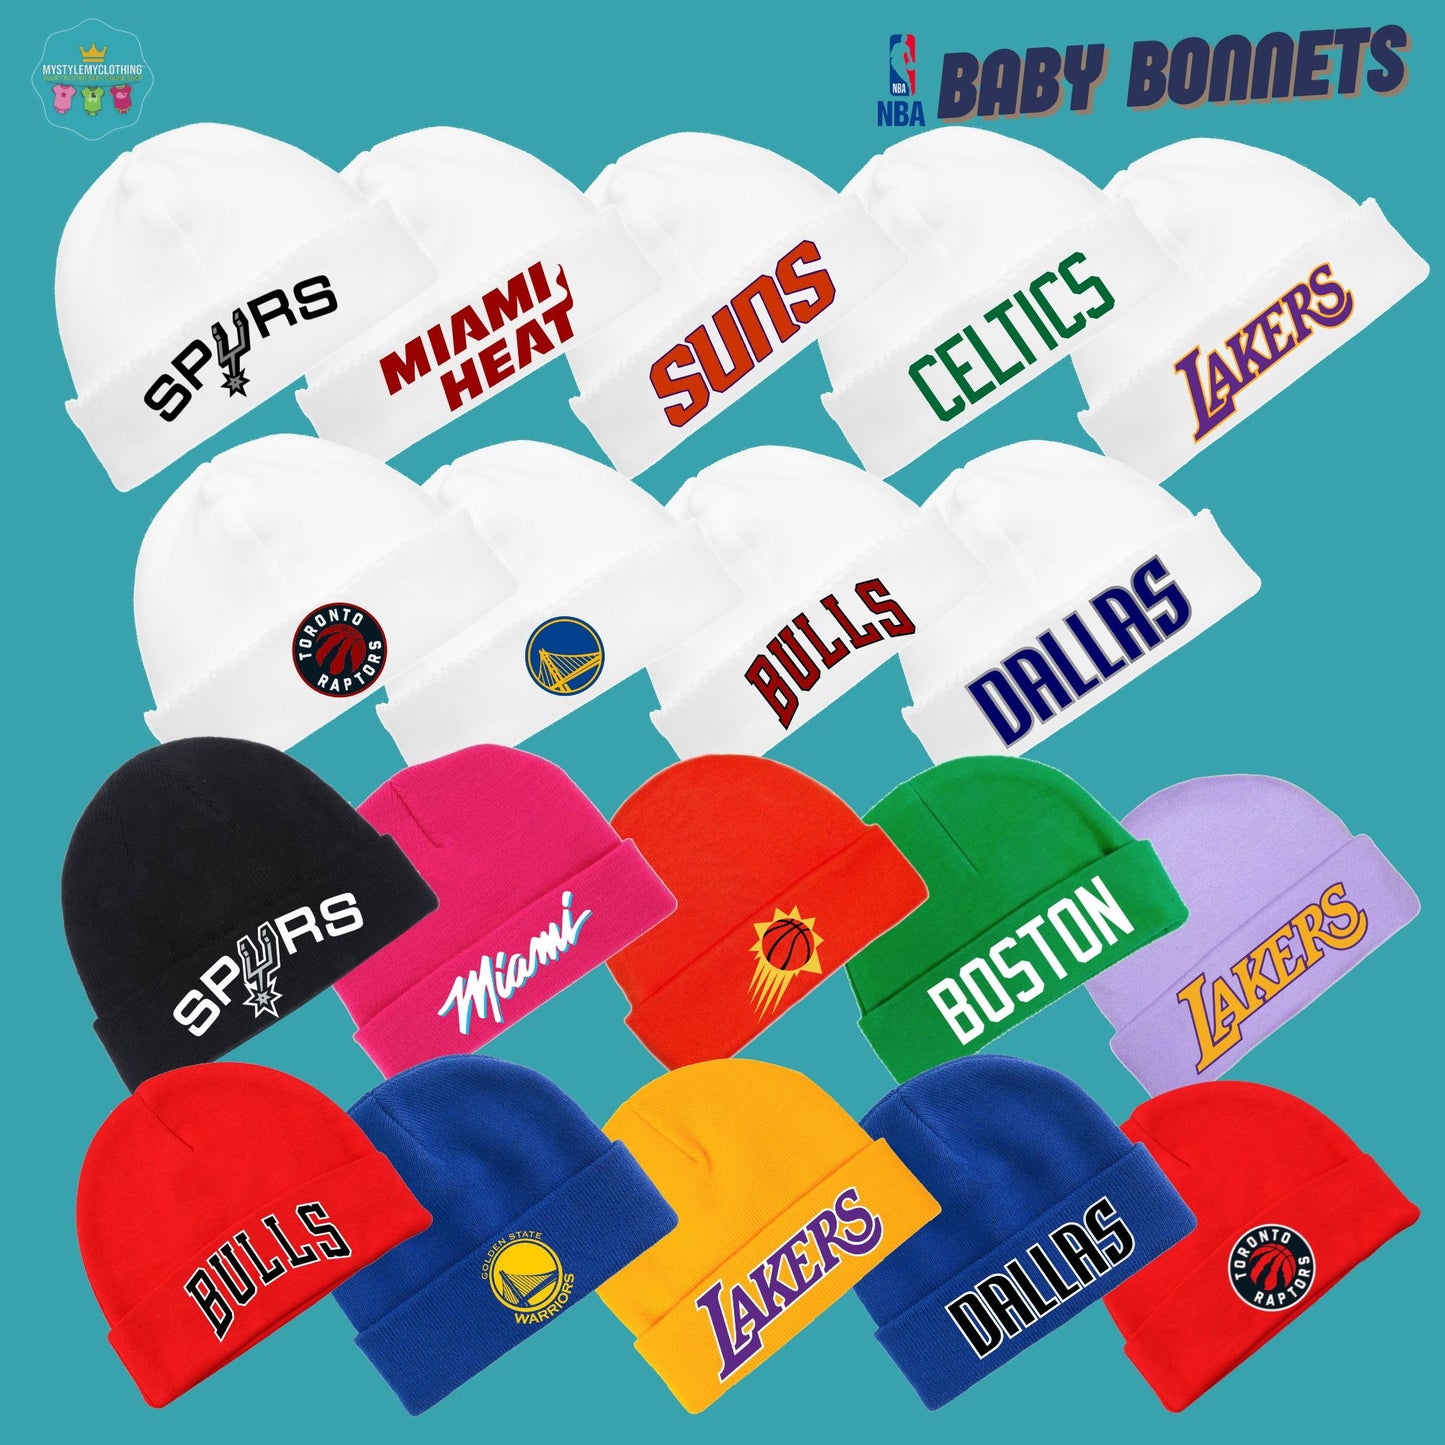 Baby Basketball Bonnets - Spurs